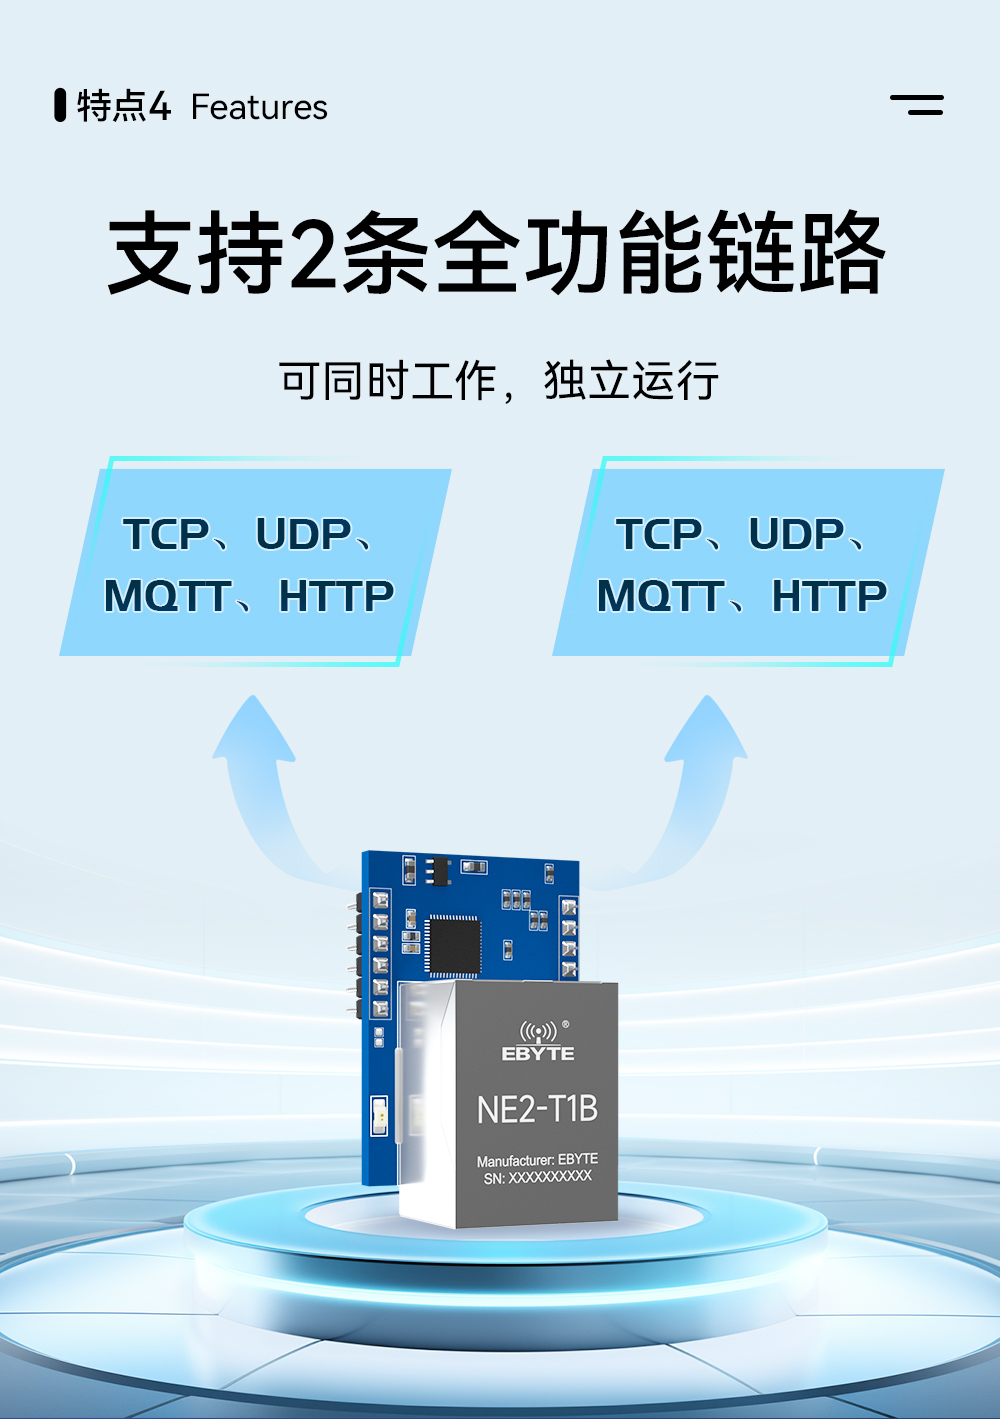 NE2-T1B 以太网转串口模组 (7)